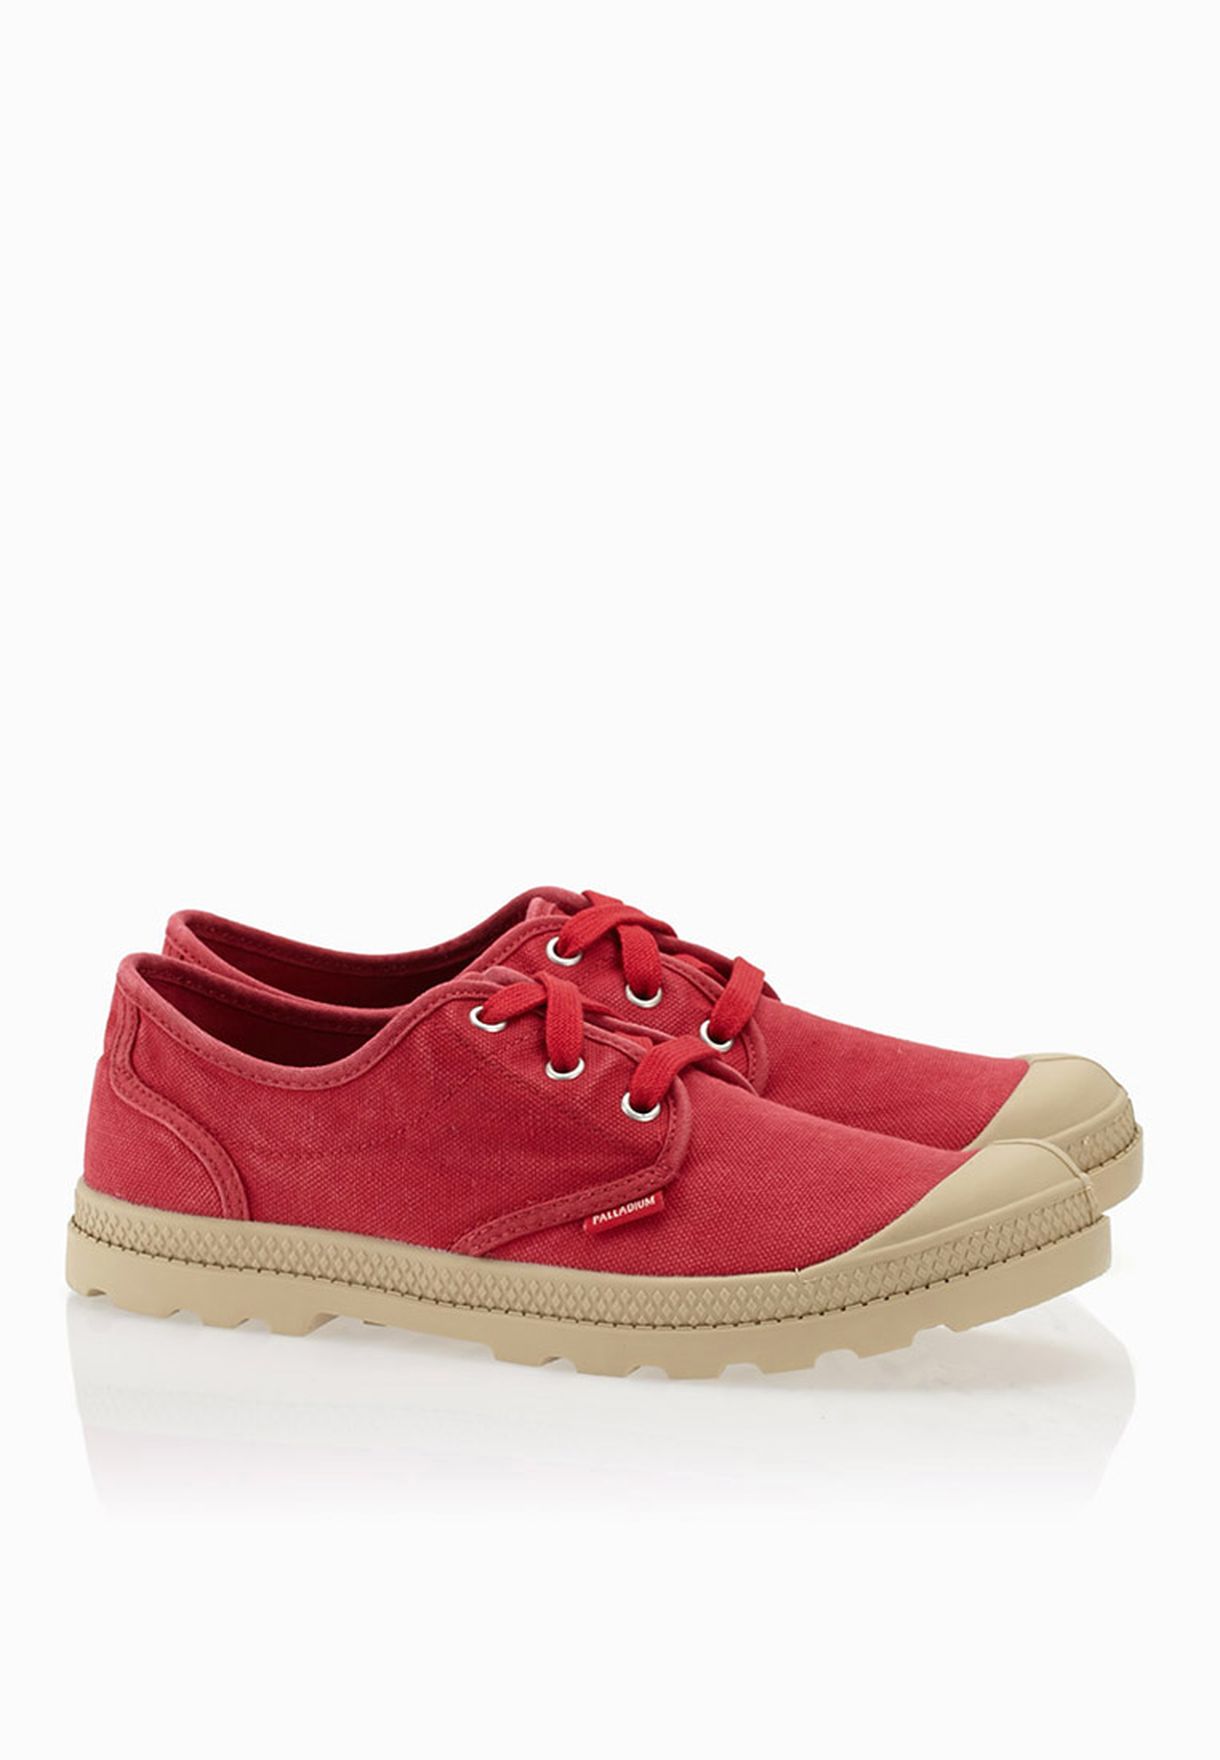 Afleiden personeelszaken Flikkeren Buy Palladium red Pampa Oxford Sneakers for Women in MENA, Worldwide 